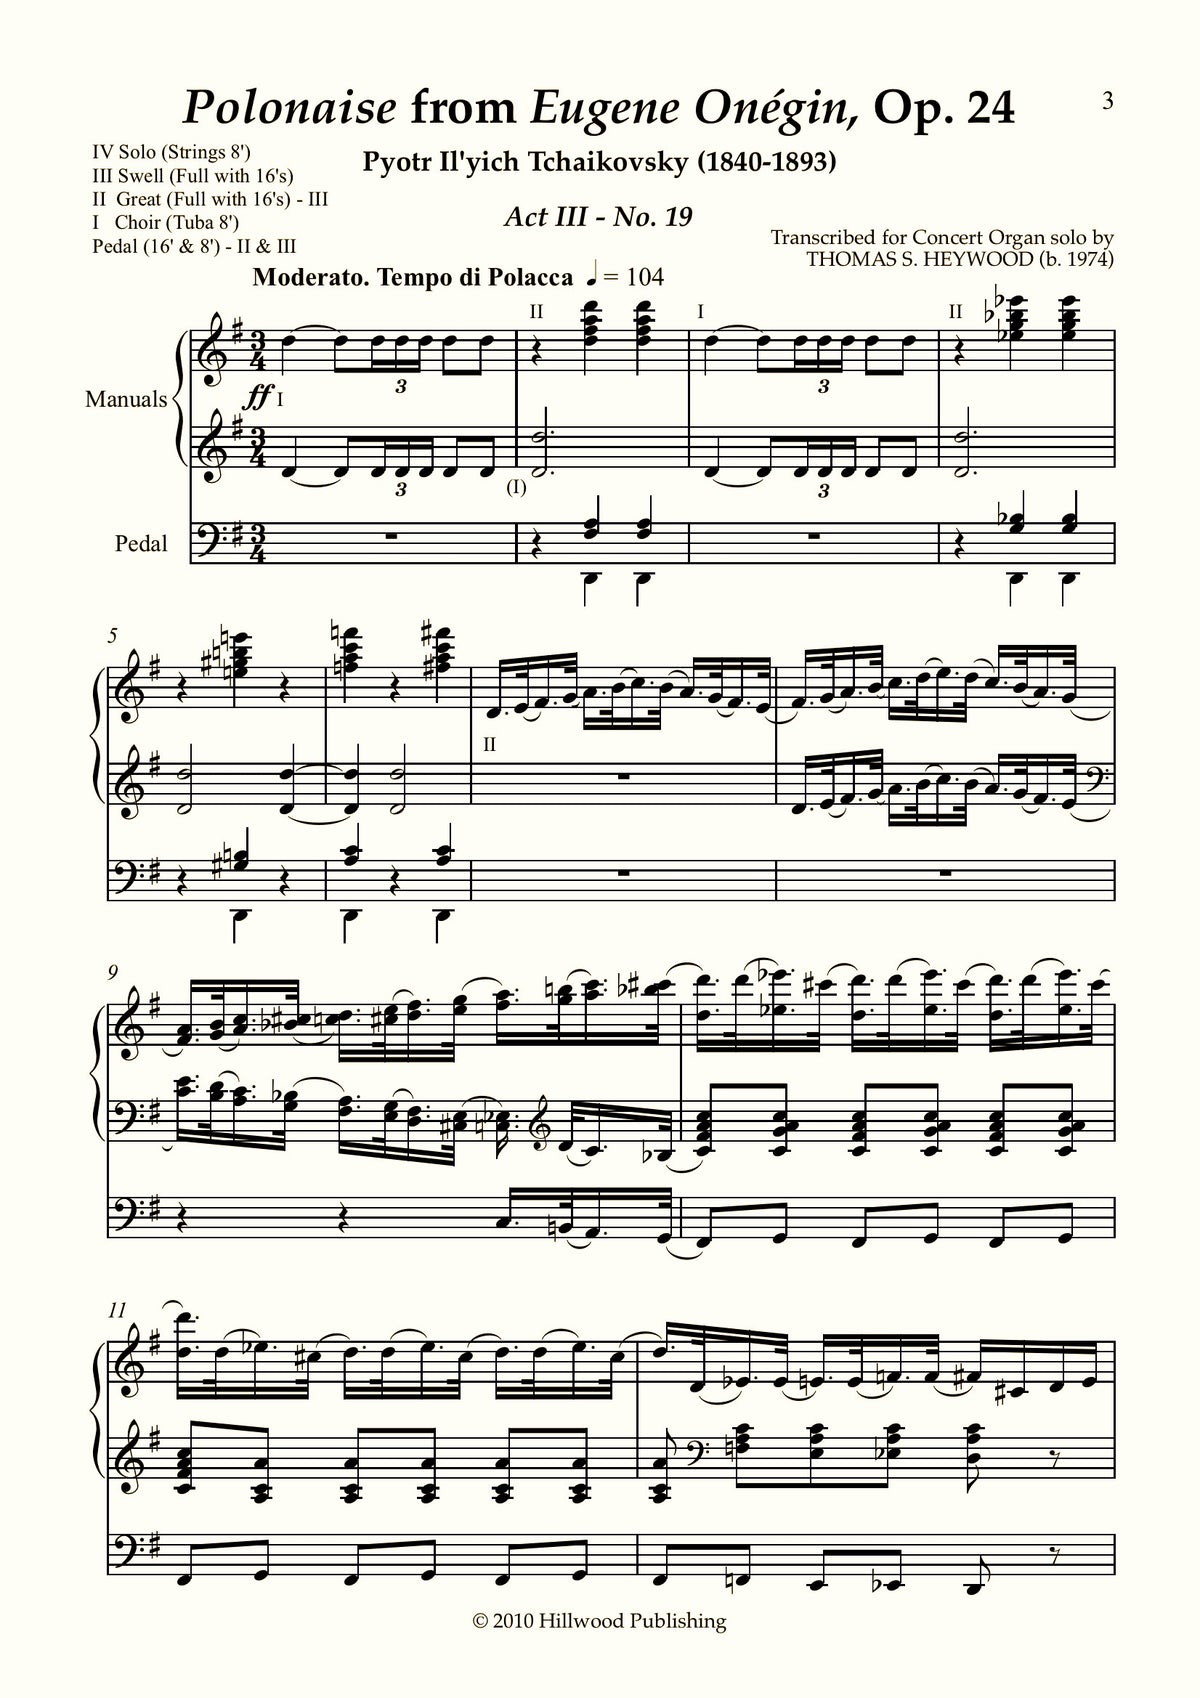 Tchaikovsky/Heywood - Polonaise from Eugene On�gin, Op. 24 (Score) - Concert Organ International